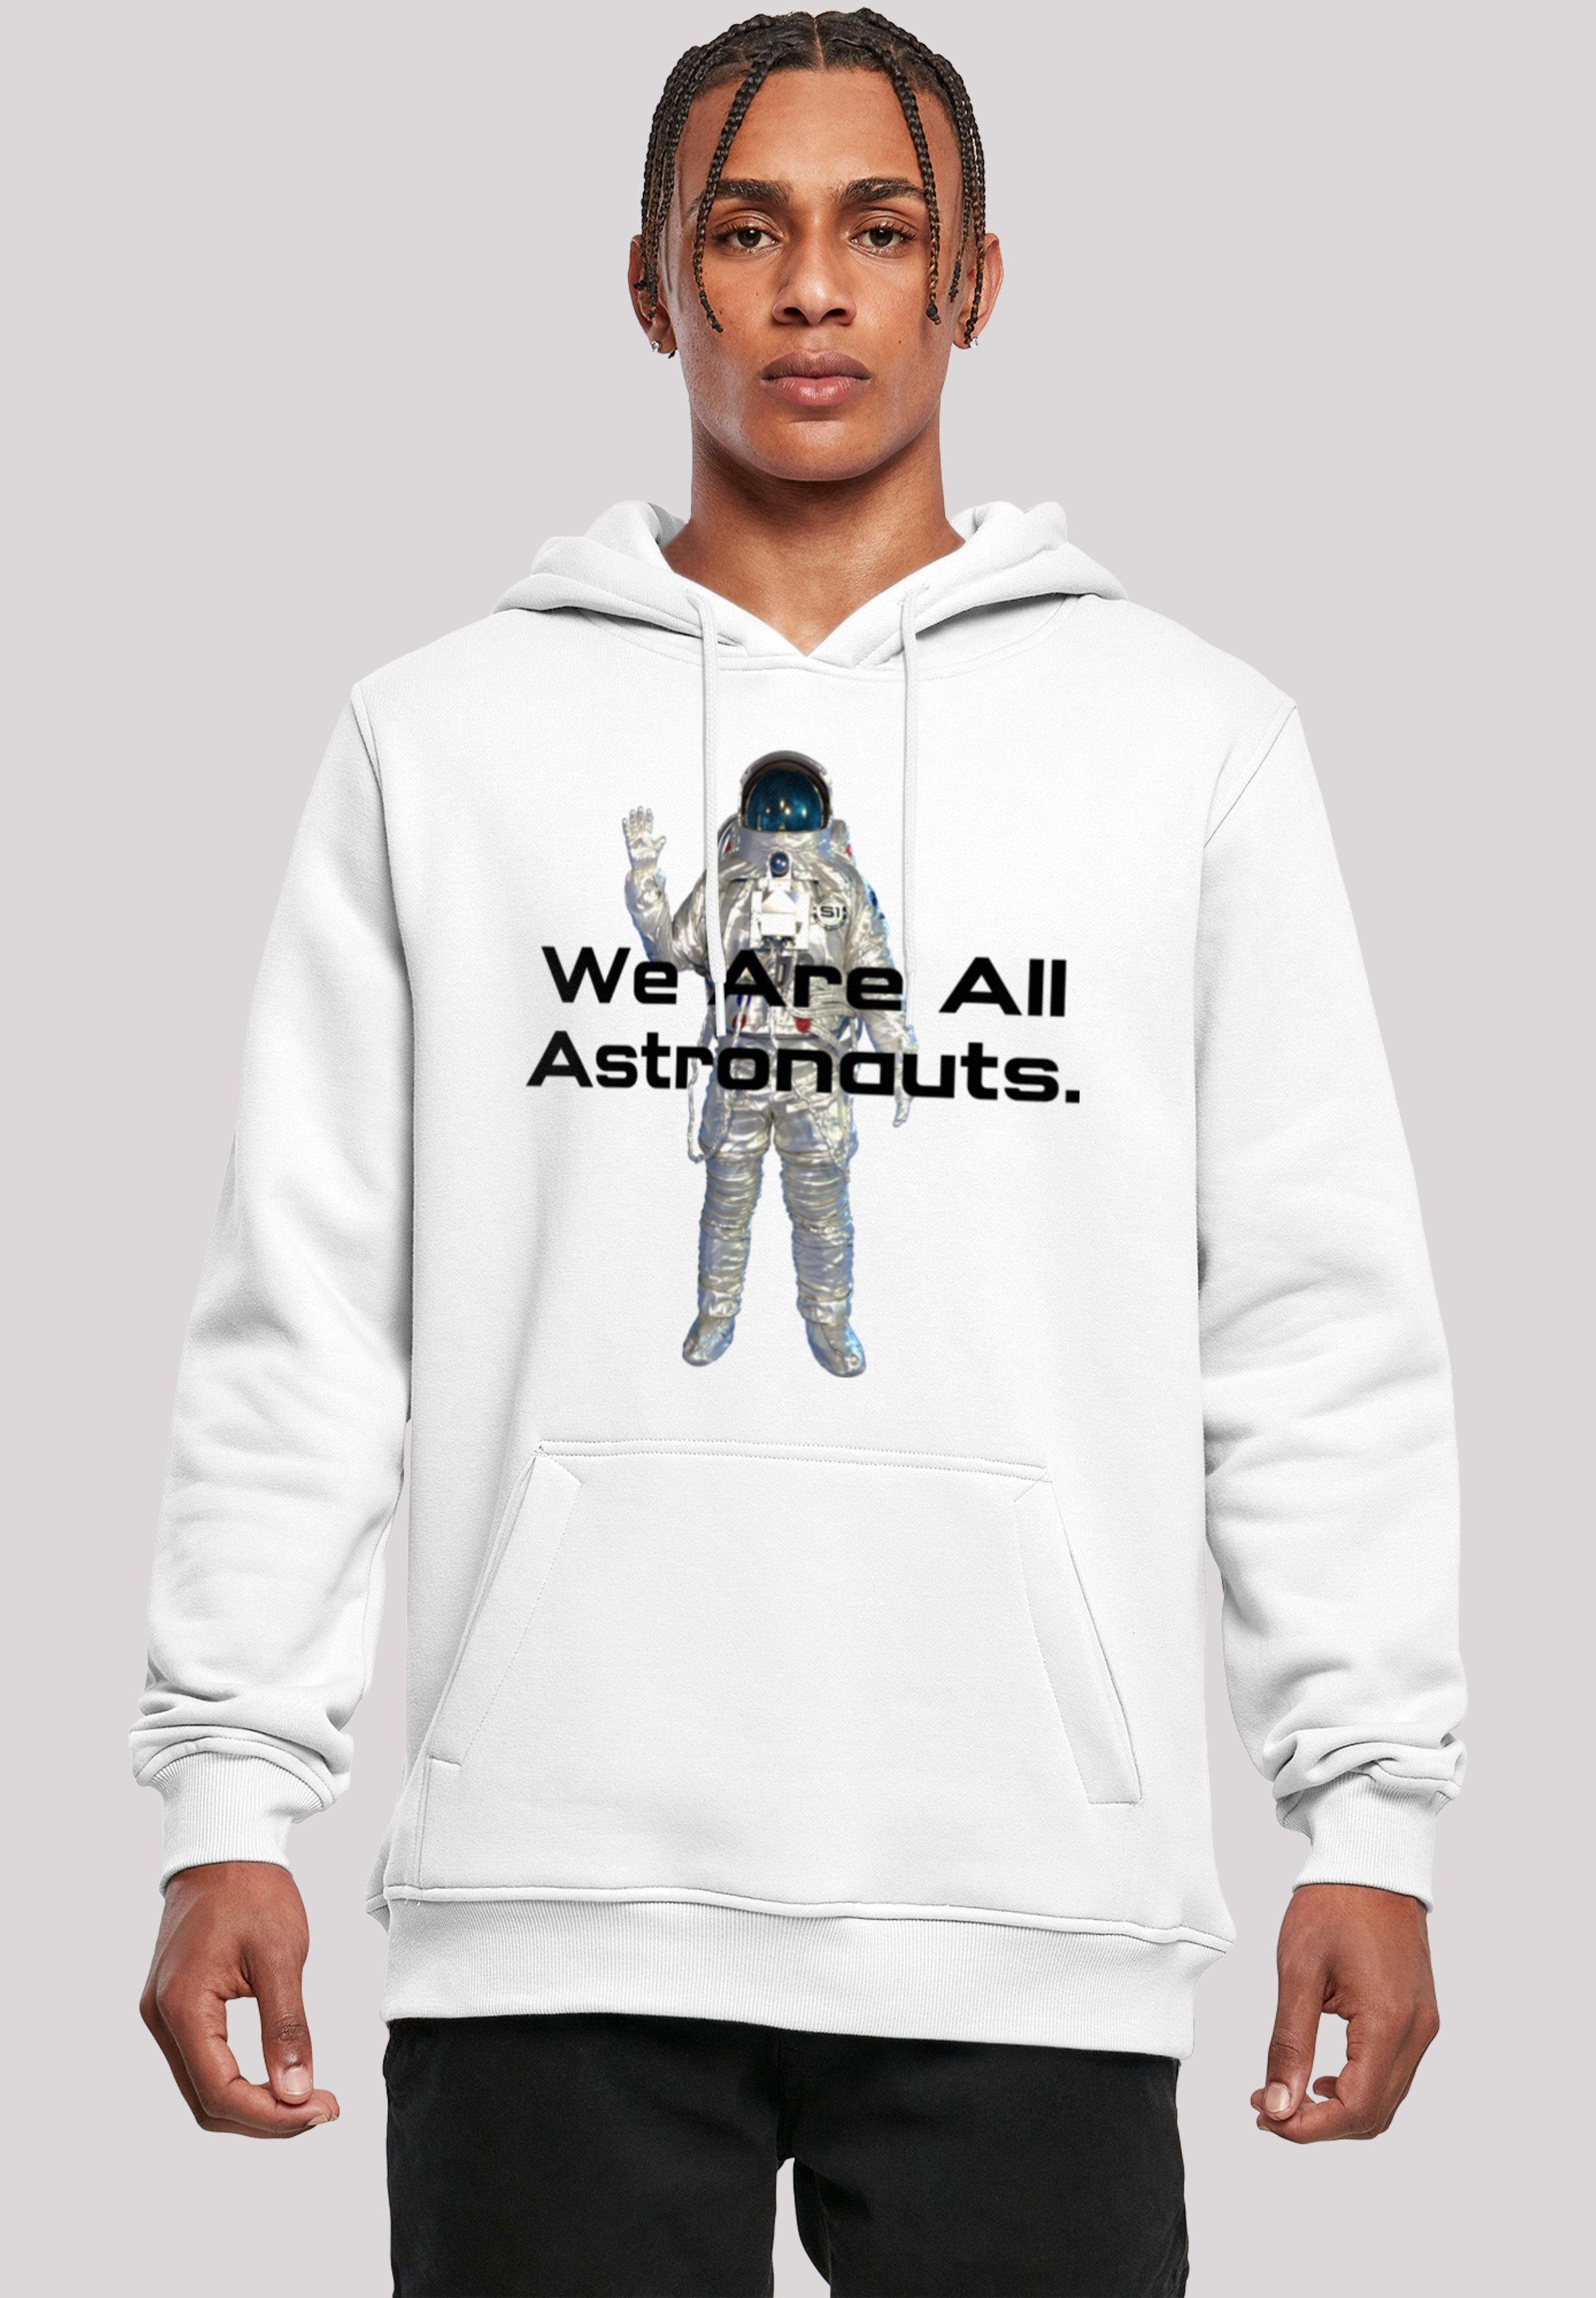 Verstellbare und astronauts SpaceOne We all Kapuze Print, F4NT4STIC are Kängurutasche PHIBER Kapuzenpullover geräumige